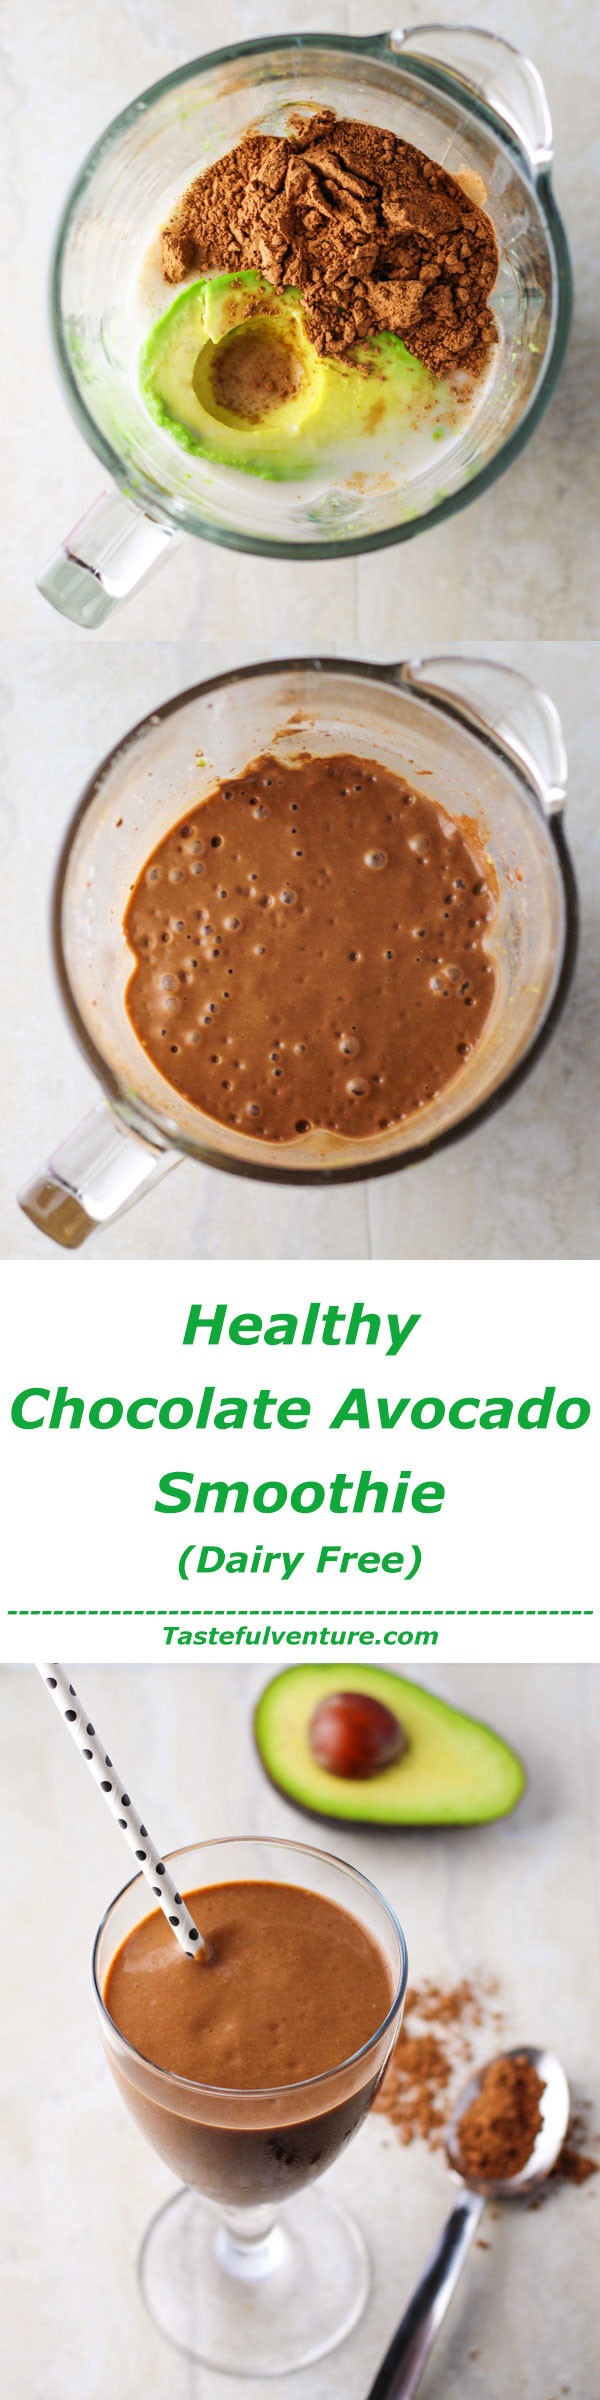 Healthy Smoothies With Cocoa Powder
 Healthy Chocolate Avocado Smoothie Tastefulventure